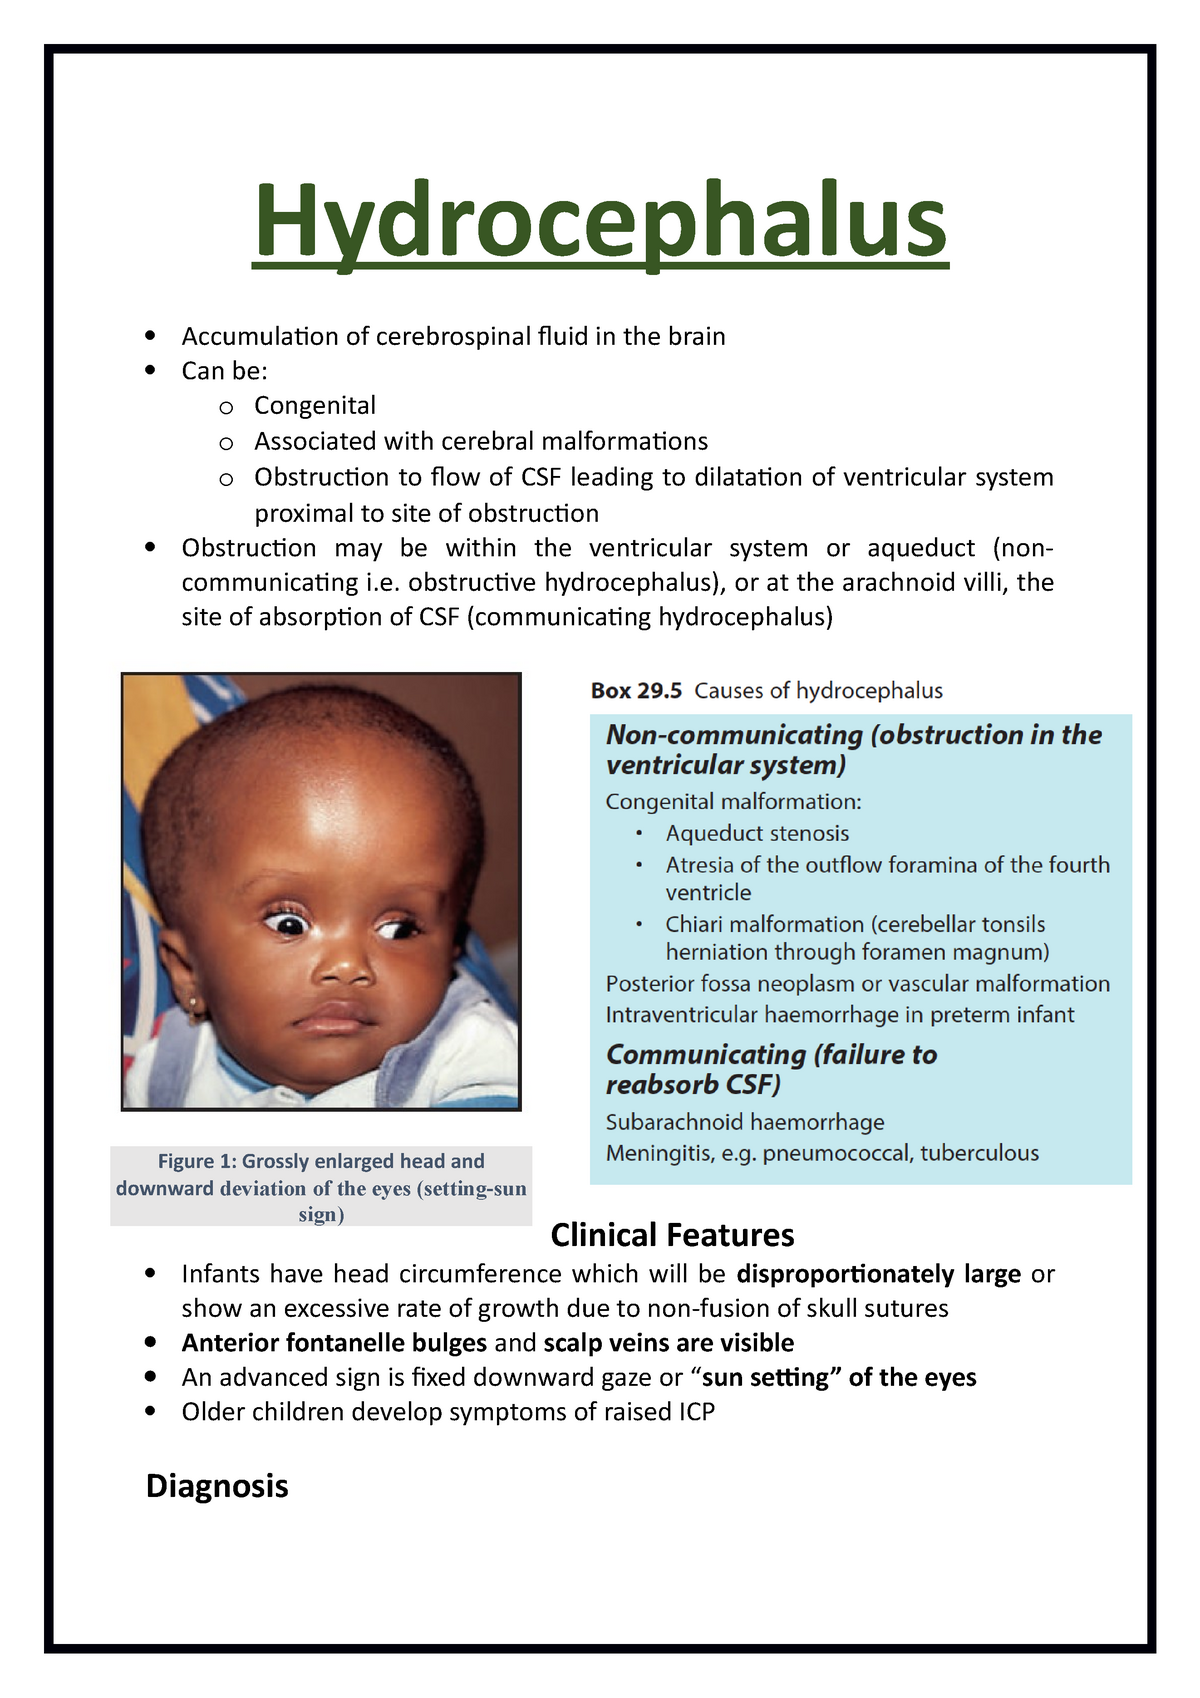 nursing case study on hydrocephalus